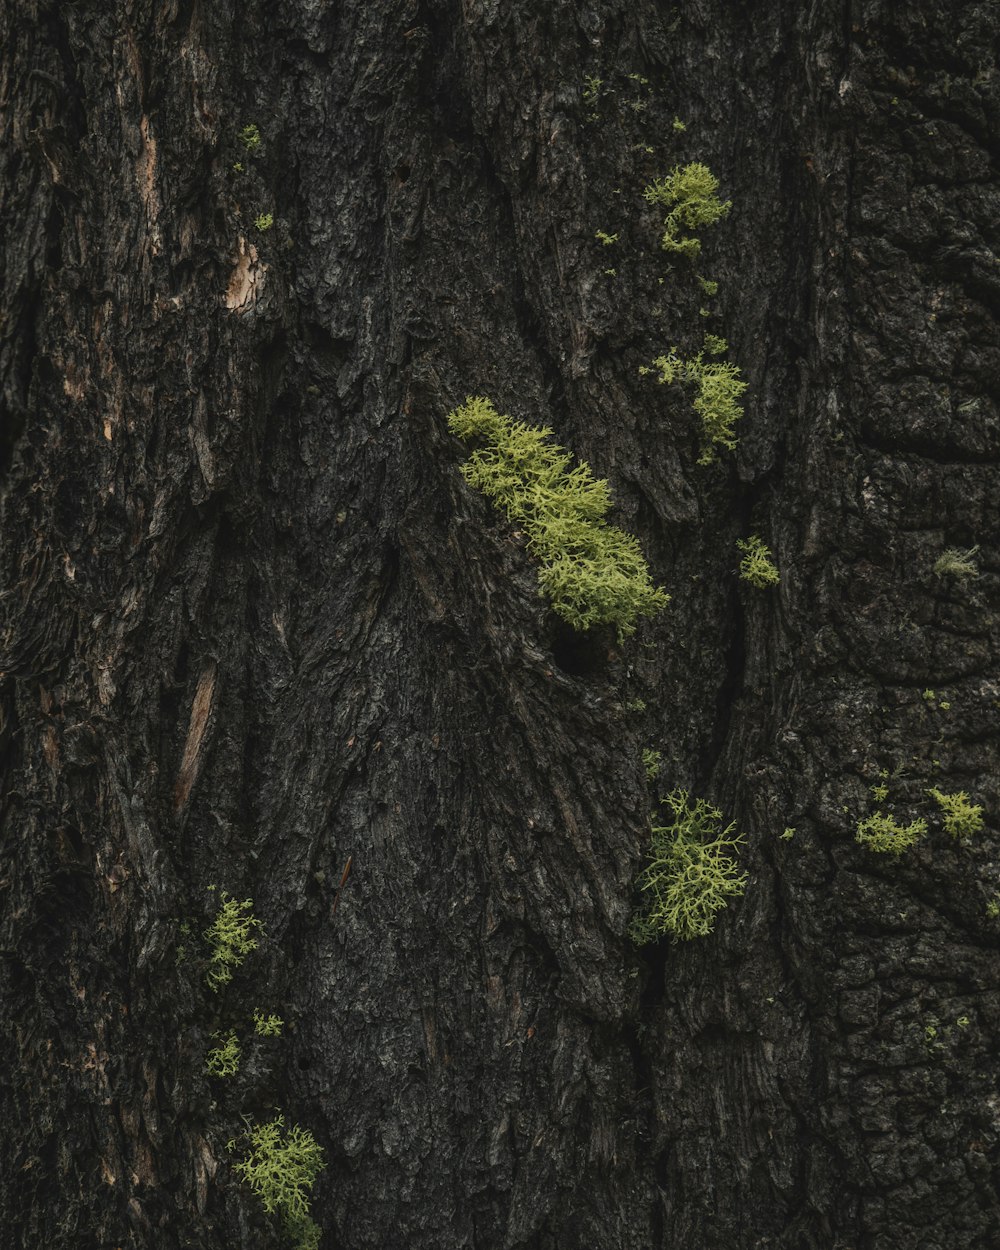 green moss growing on tree bark